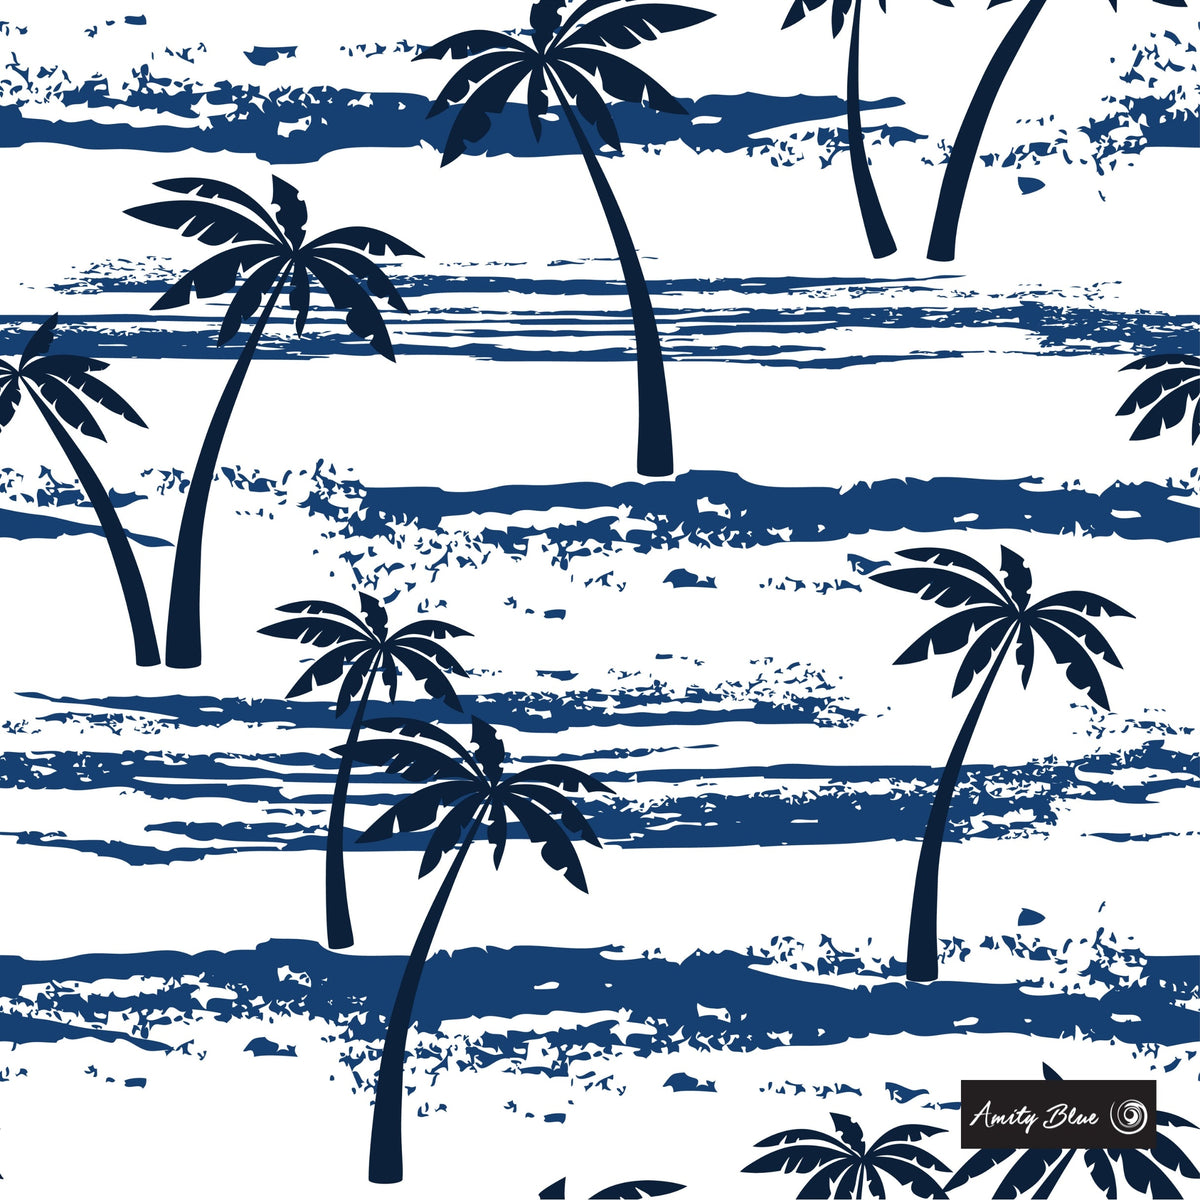 Palm Tree Beach Blanket - Amity Blue